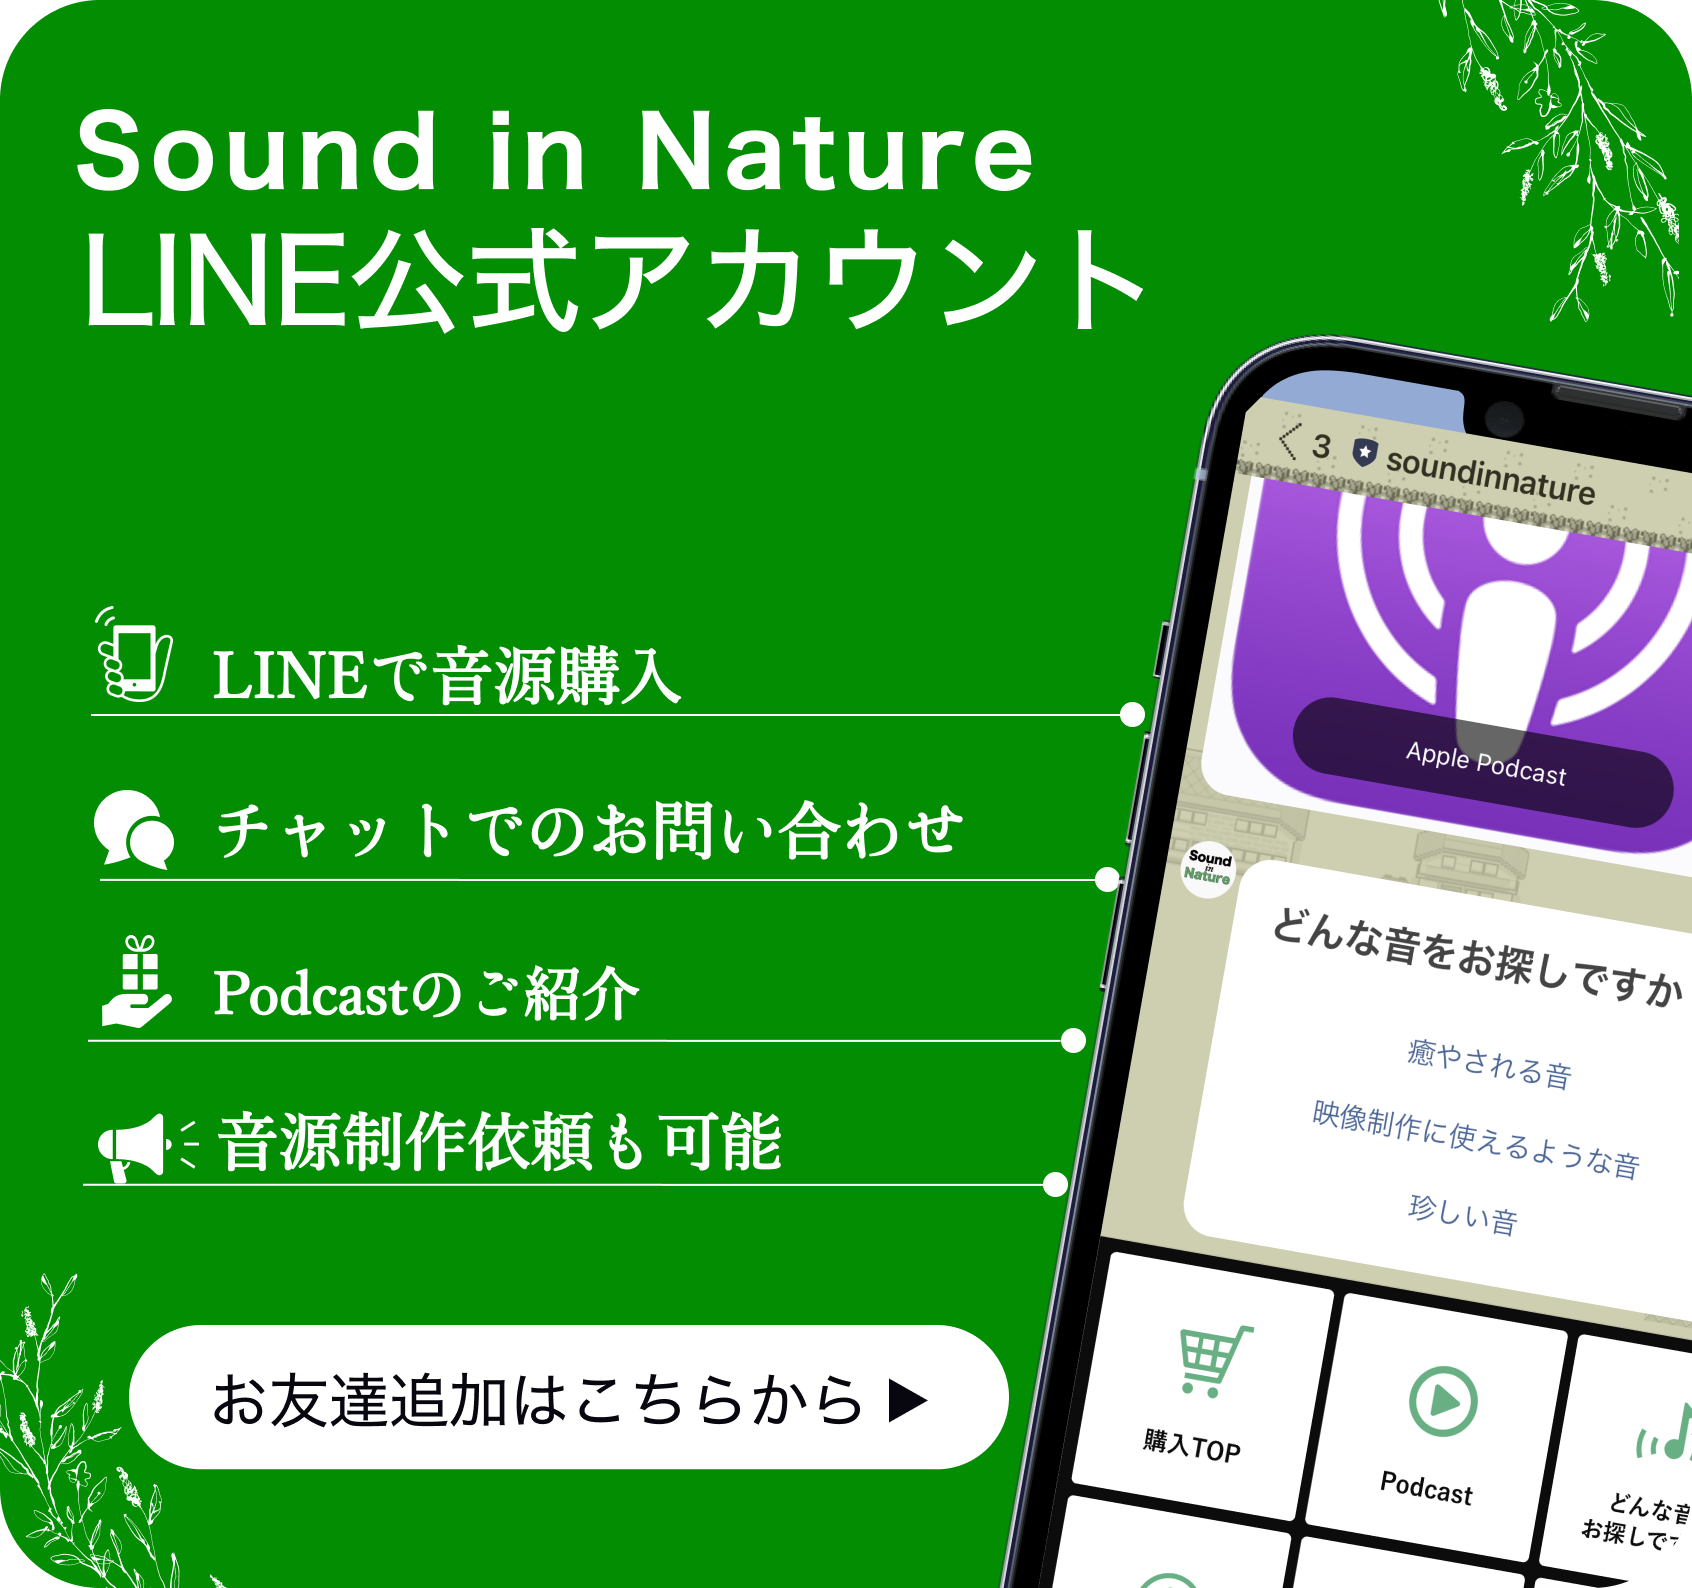 LINE Sound in Nature